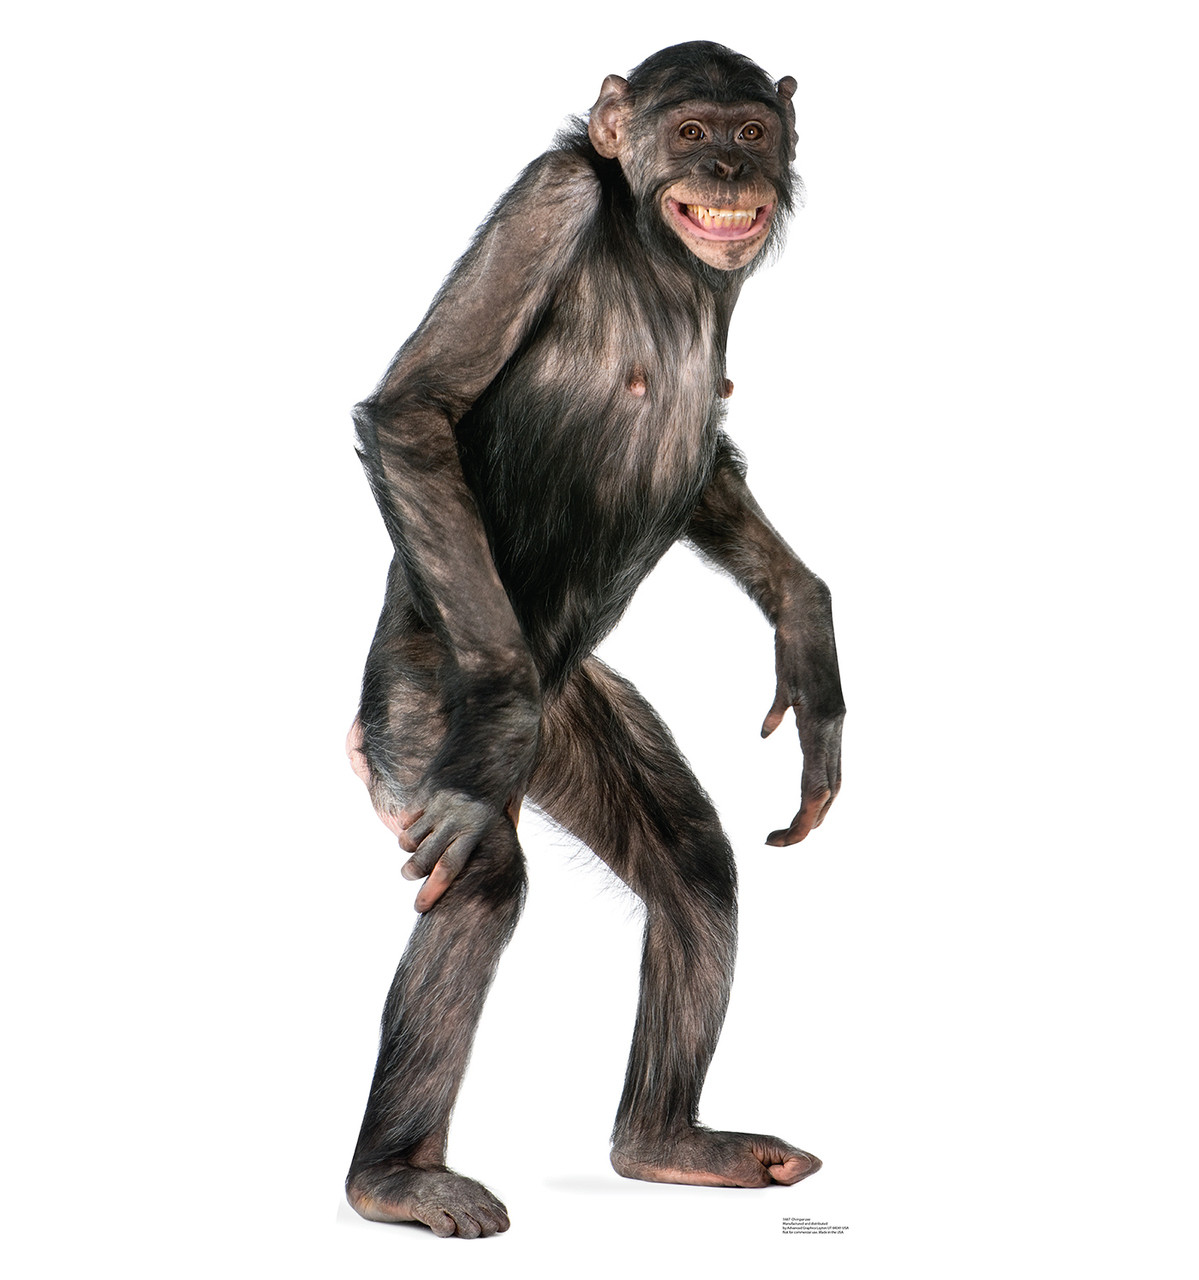 average chimpanzee weight